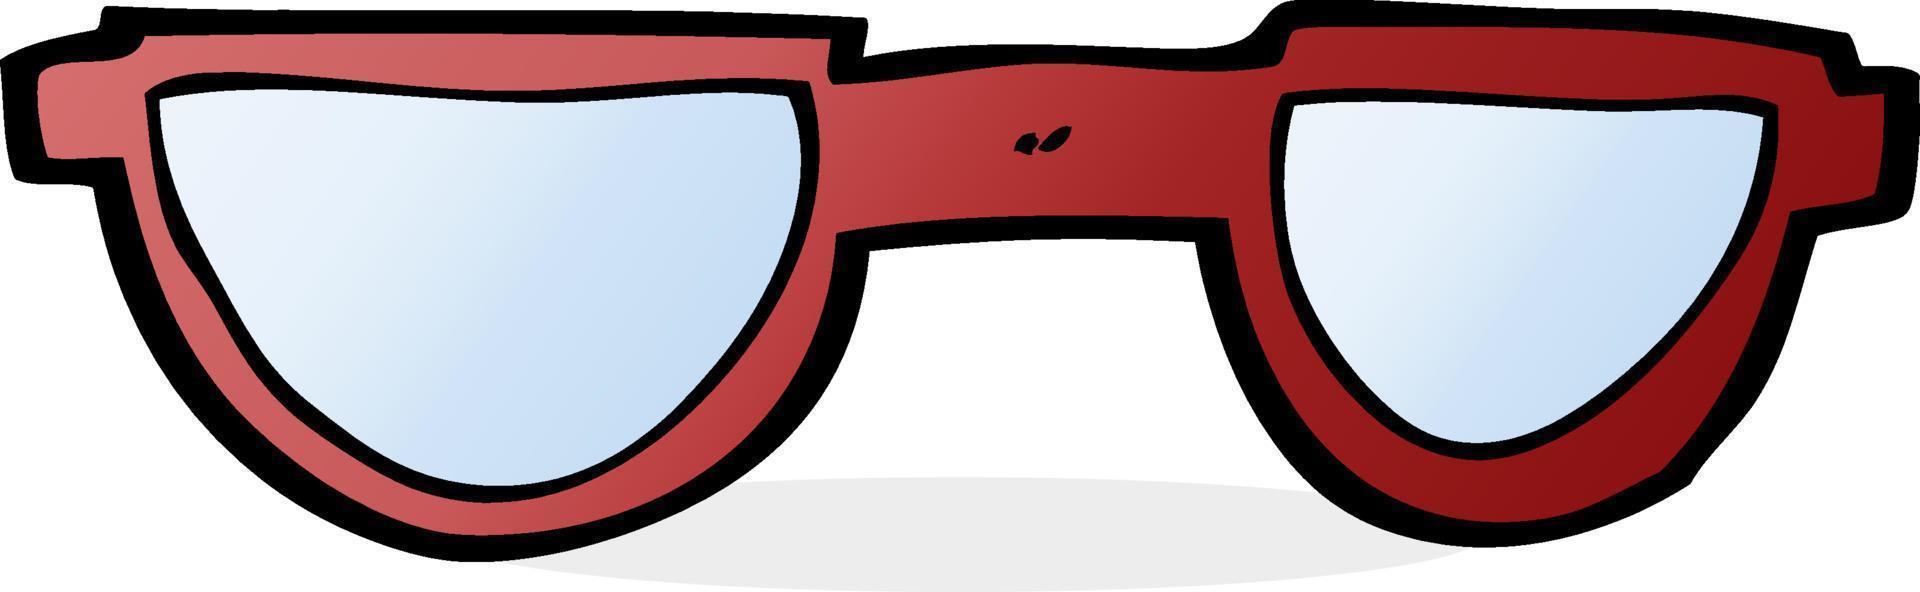 doodle cartoon glasses vector